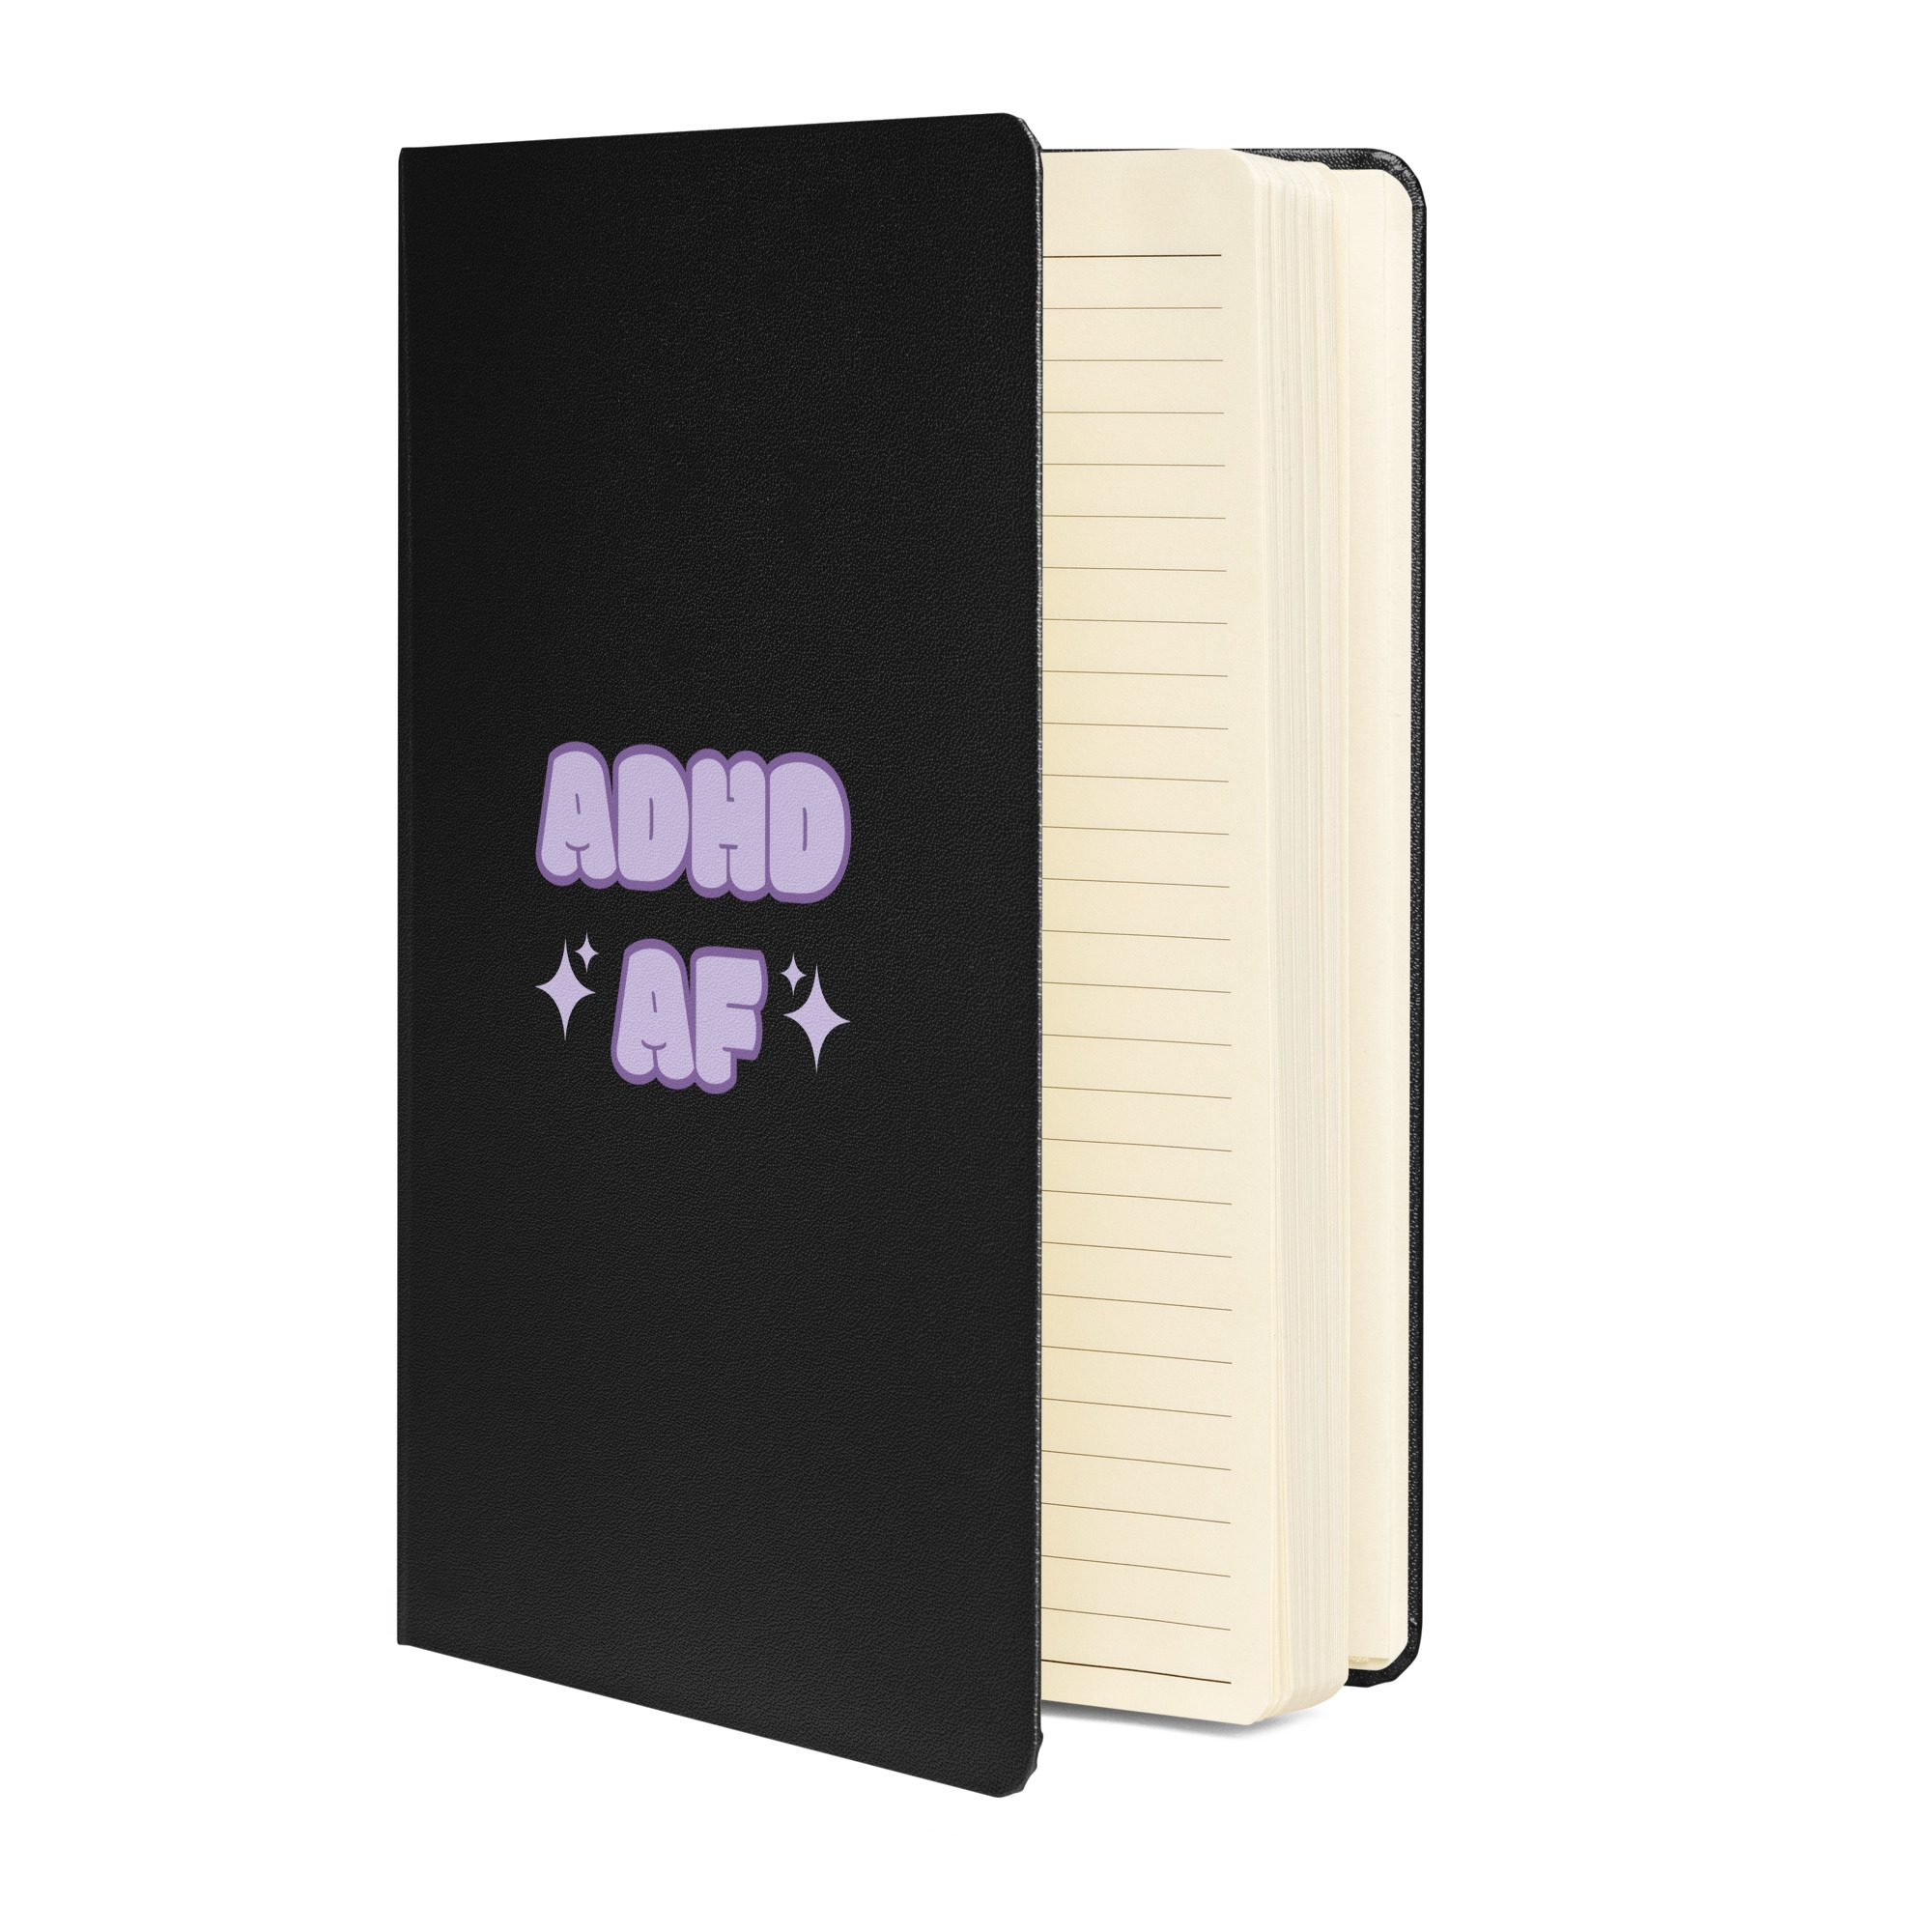 ADHD AF Hardcover Bound Notebook